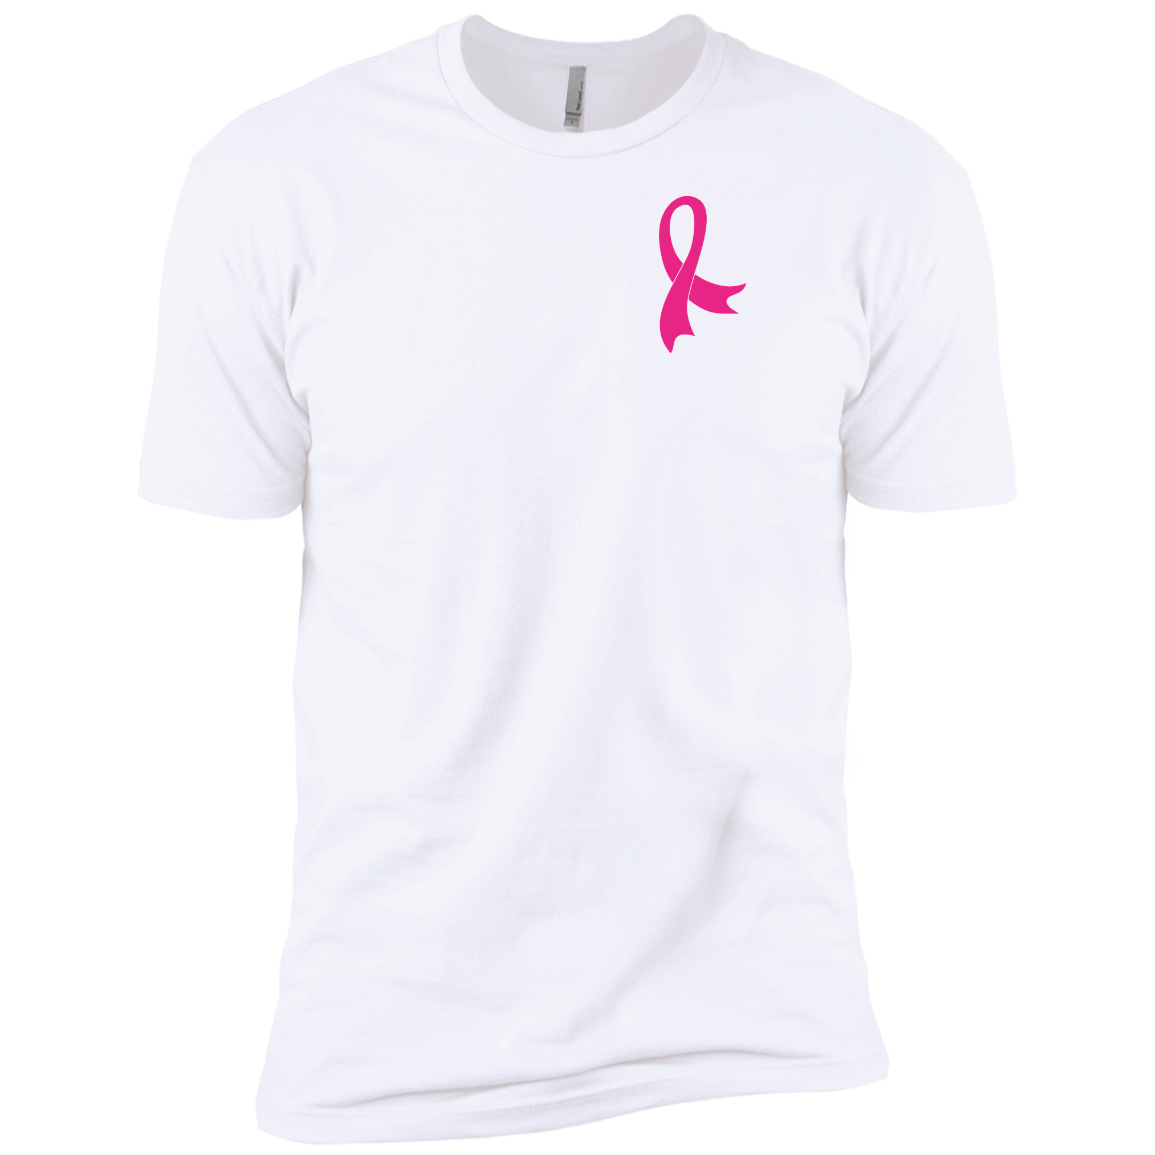 saints breast cancer shirt